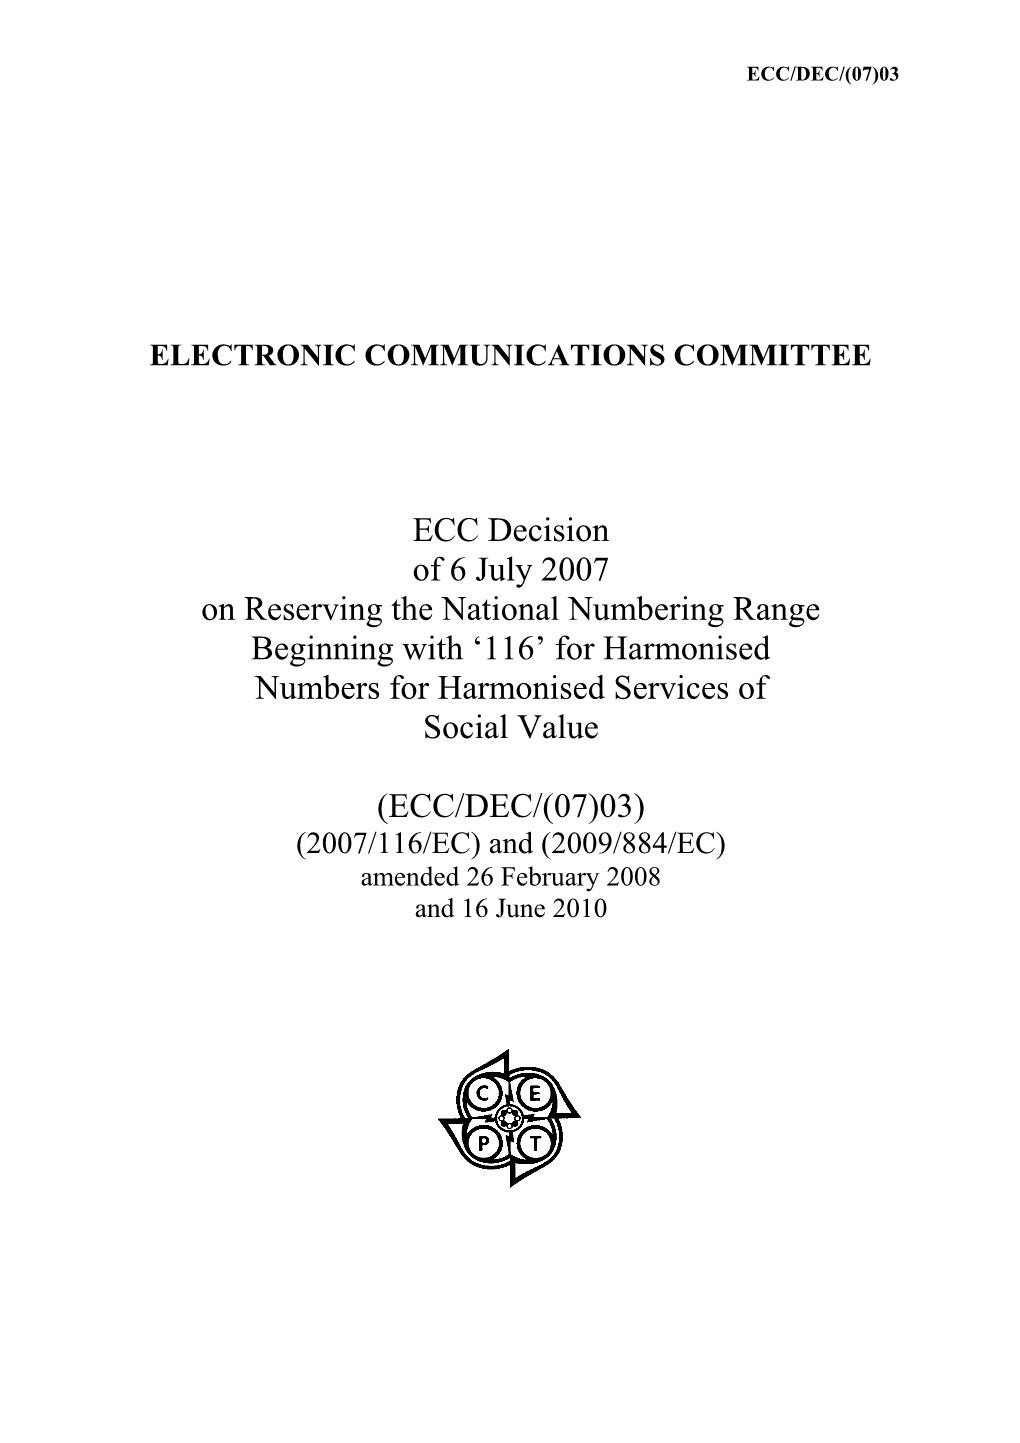 ECC Decision (07) 03 on HESC - Amendment 2